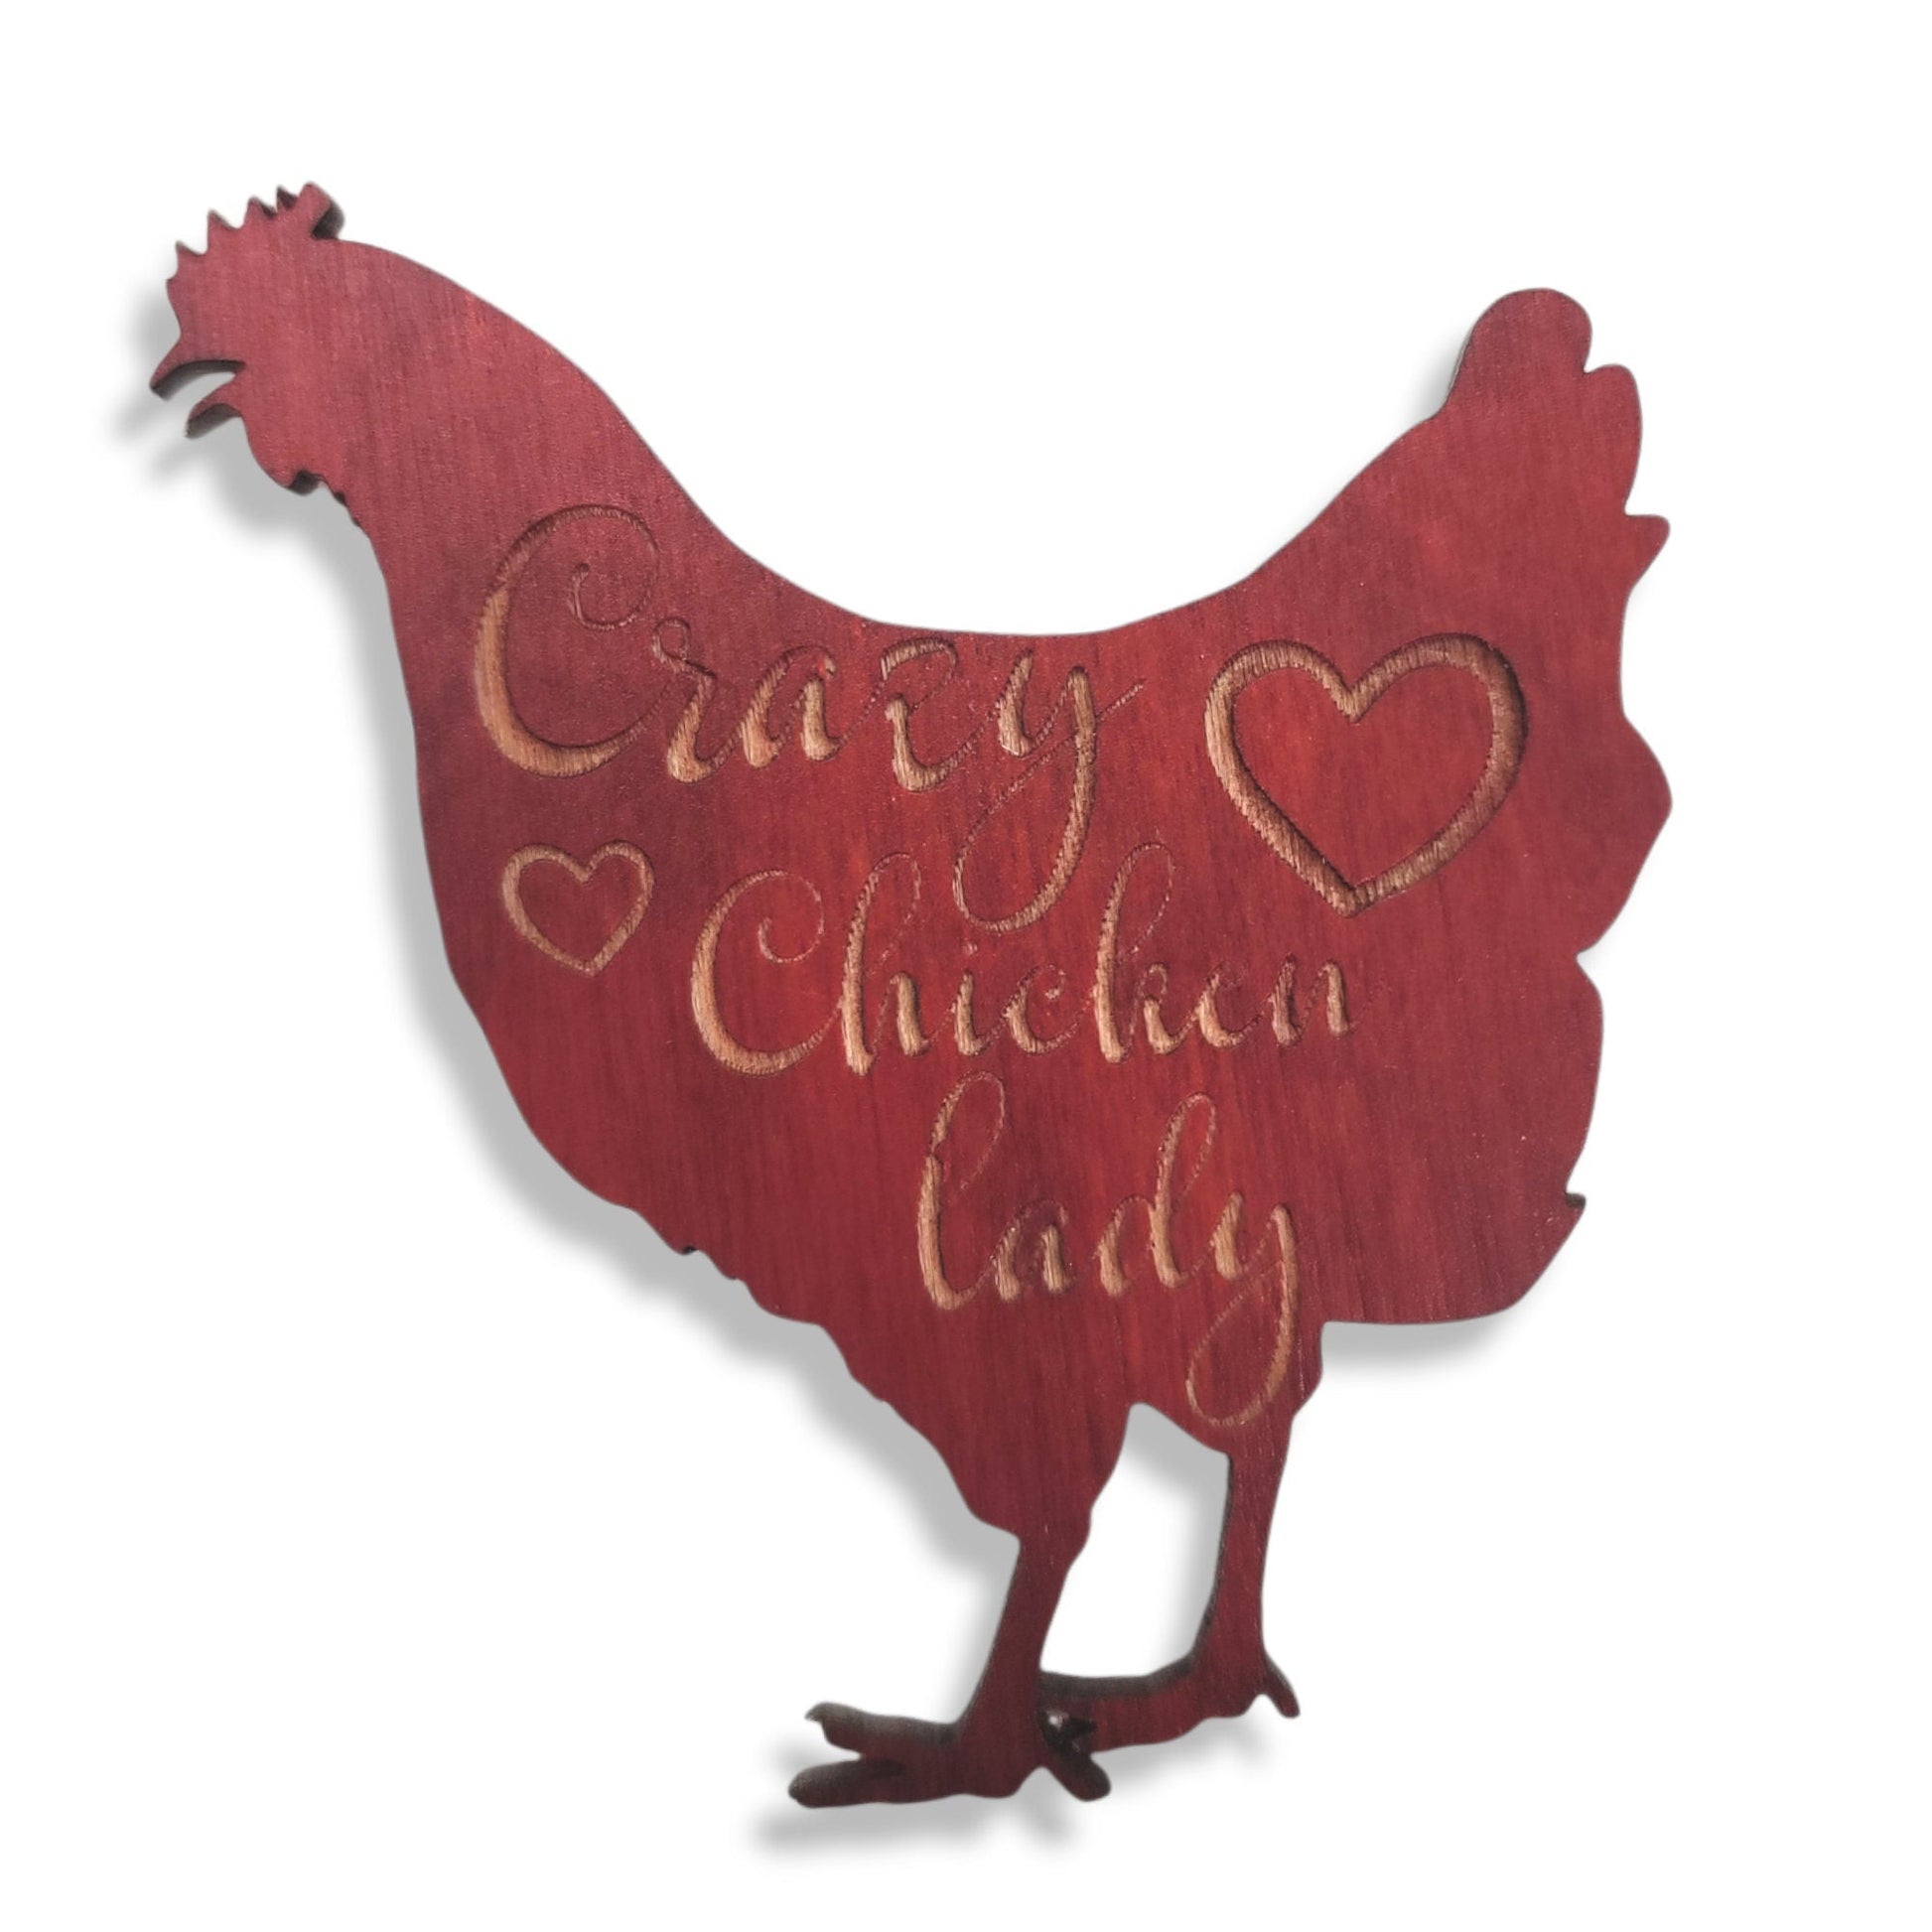 Magnet Crazy Chicken Lady Fridge Magnet | Jones Laser Craft Personalized Gift